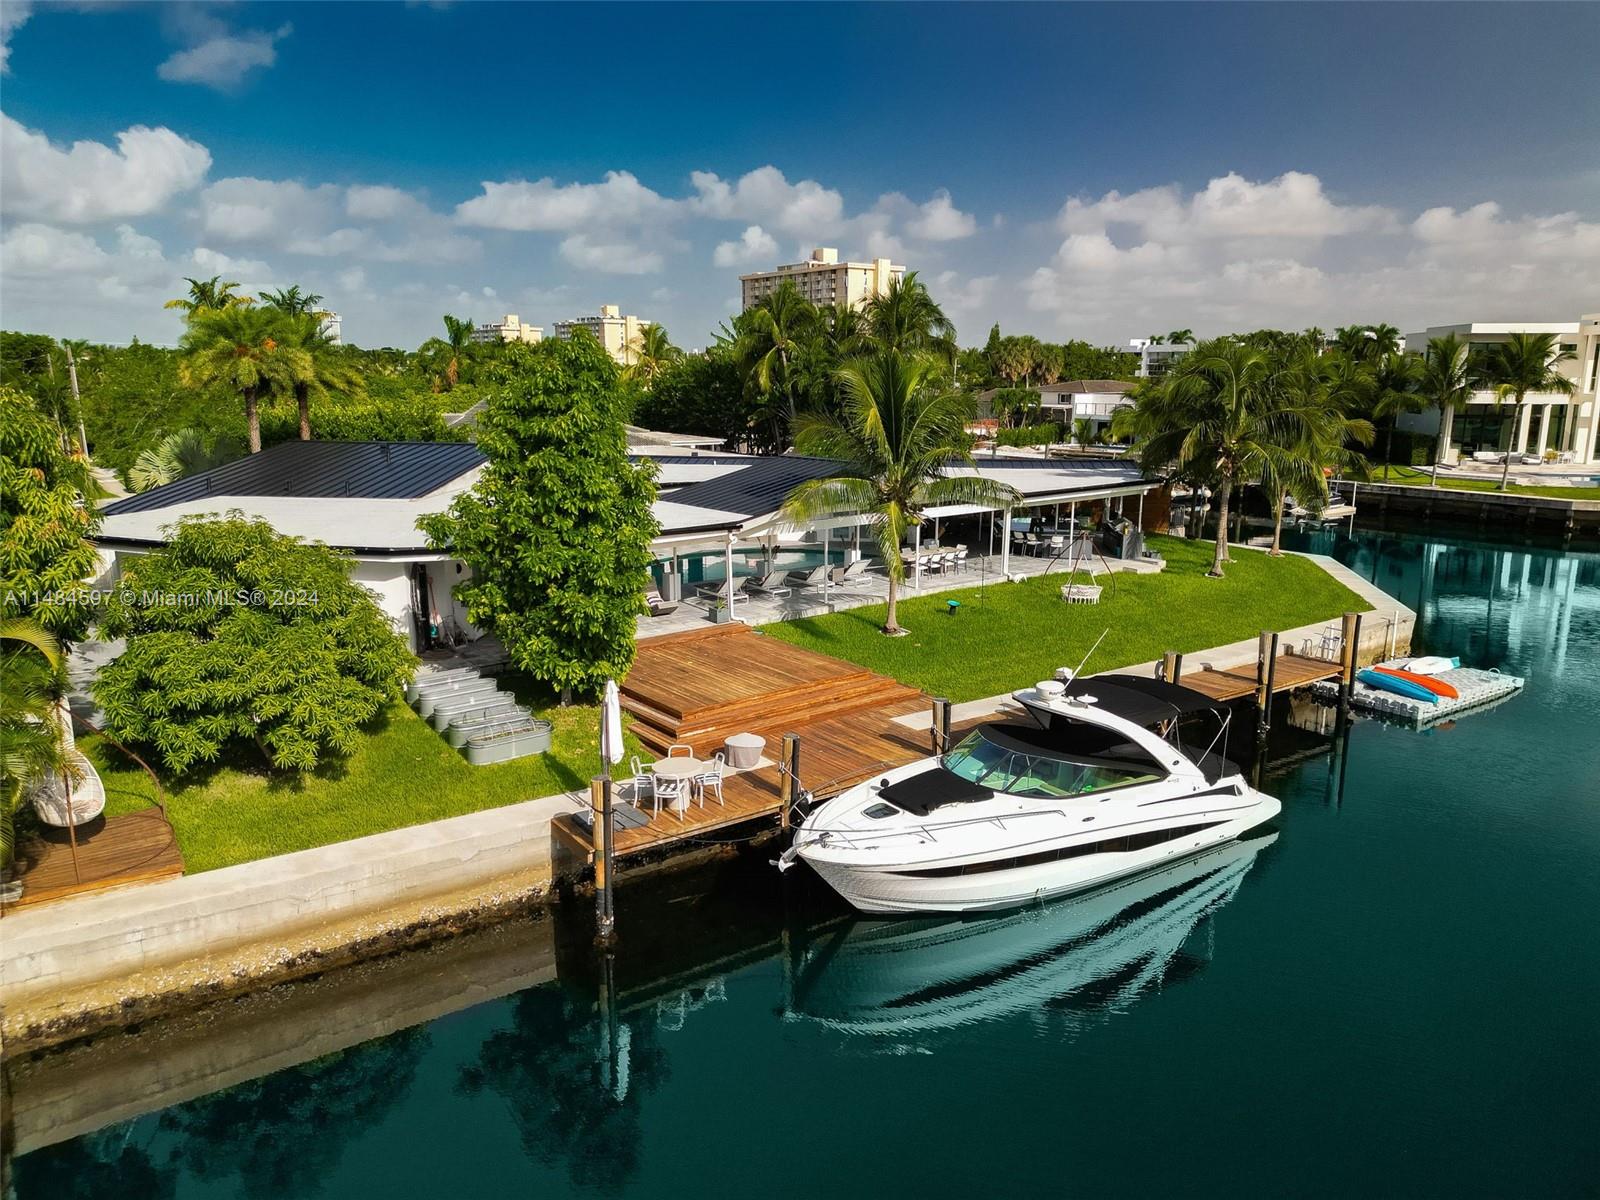 Property for Sale at 2415 Magnolia Dr, North Miami, Miami-Dade County, Florida - Bedrooms: 6 
Bathrooms: 5  - $5,000,000